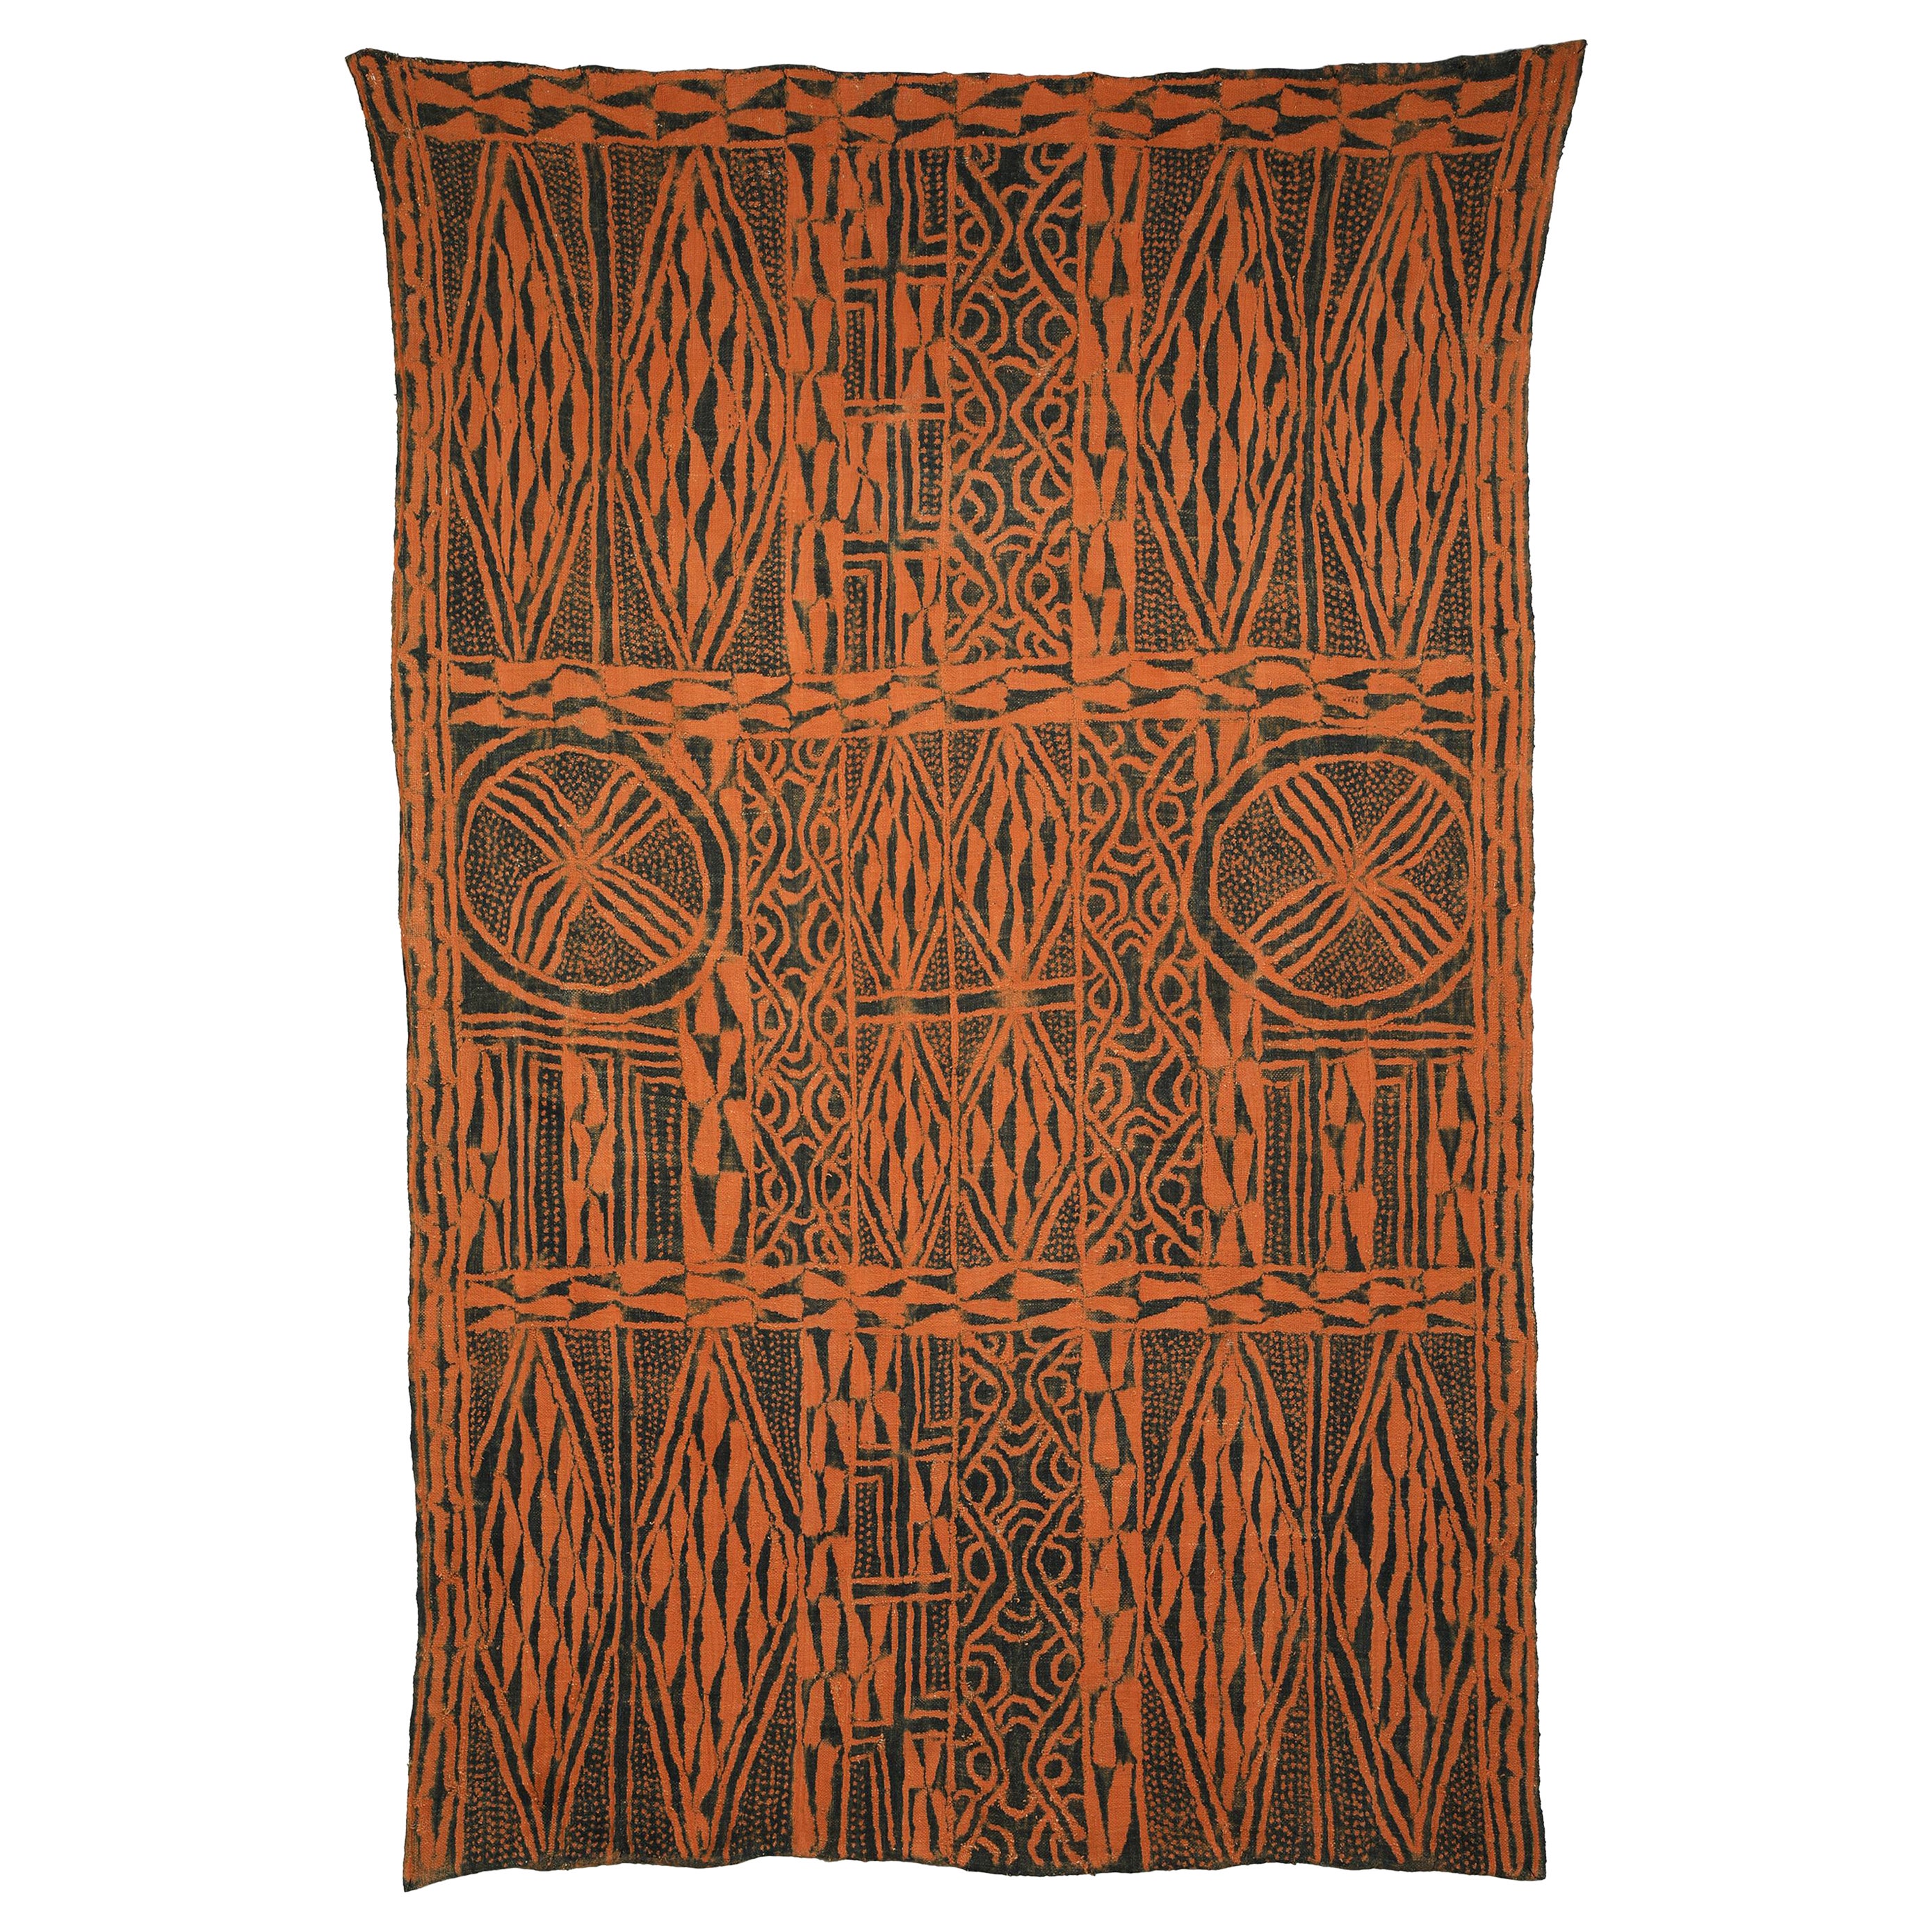 Hängemöbel des 20. Jahrhunderts aus Bamileke-Textil, Ndop